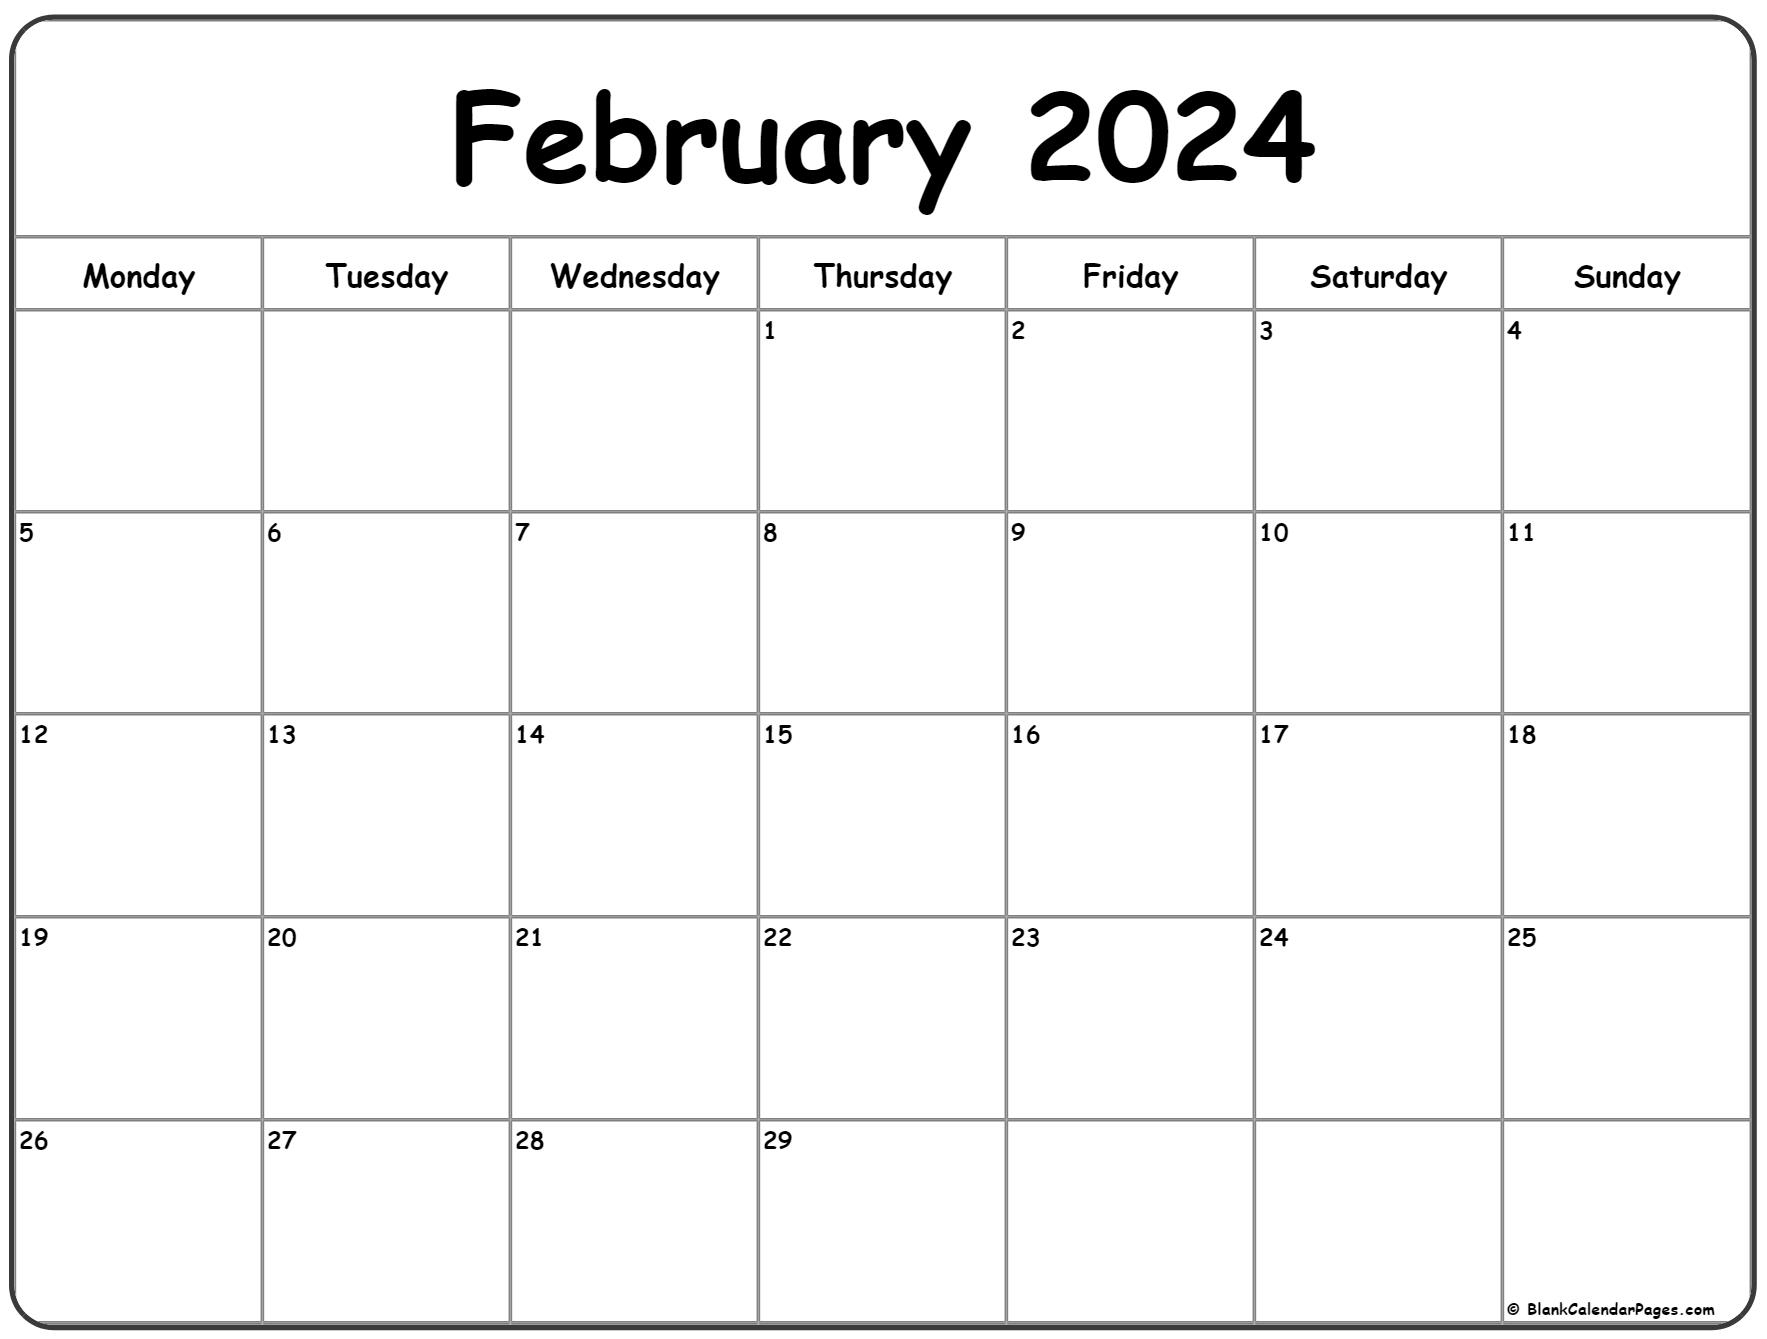 February 2024 Monday Calendar | Monday To Sunday for Printable 2024 Feb Calendar